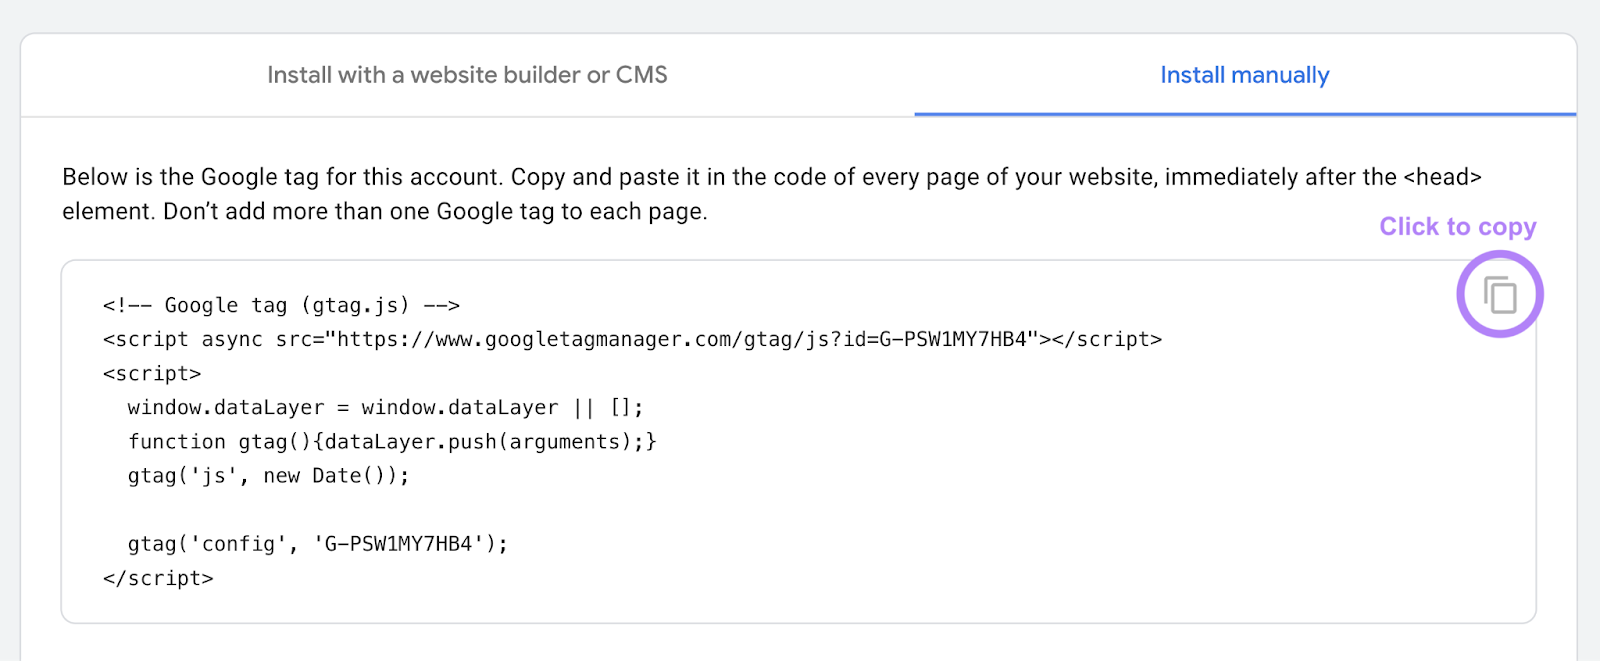 Google Analytics code in the “Install manually” tab